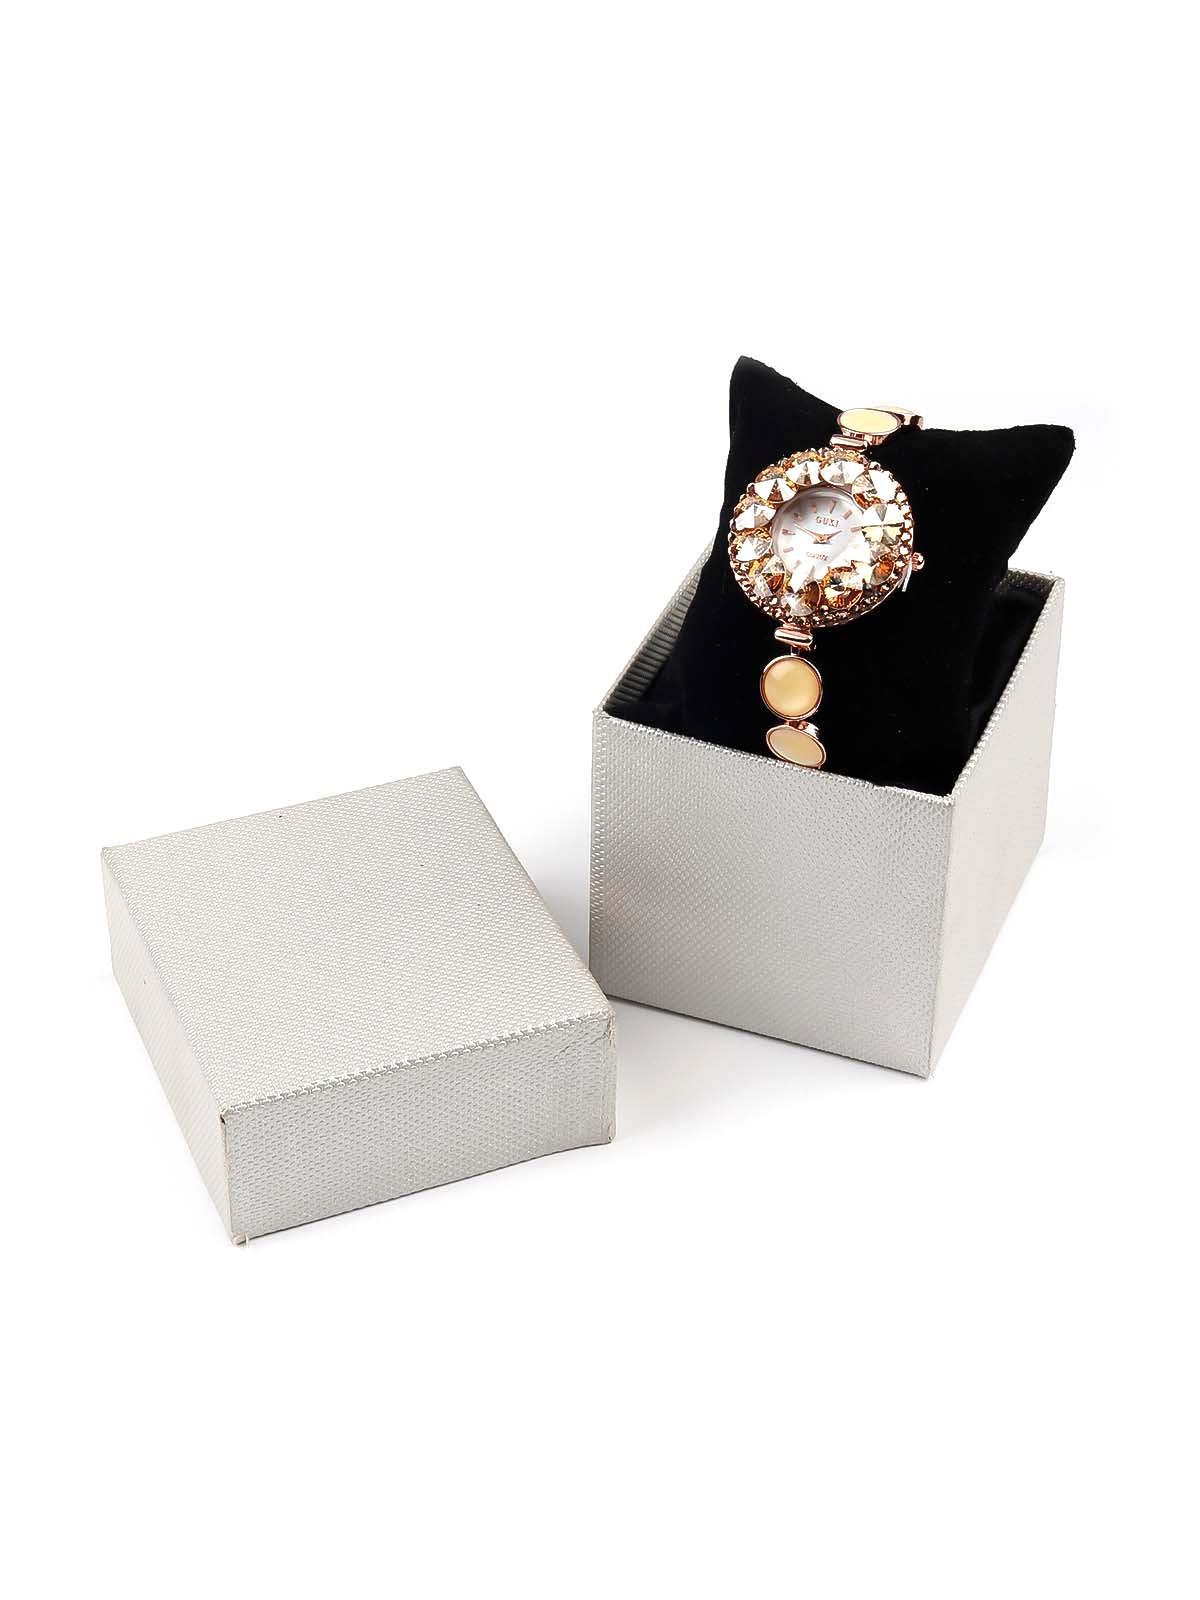 Stunning gold embellished watch for women - Odette